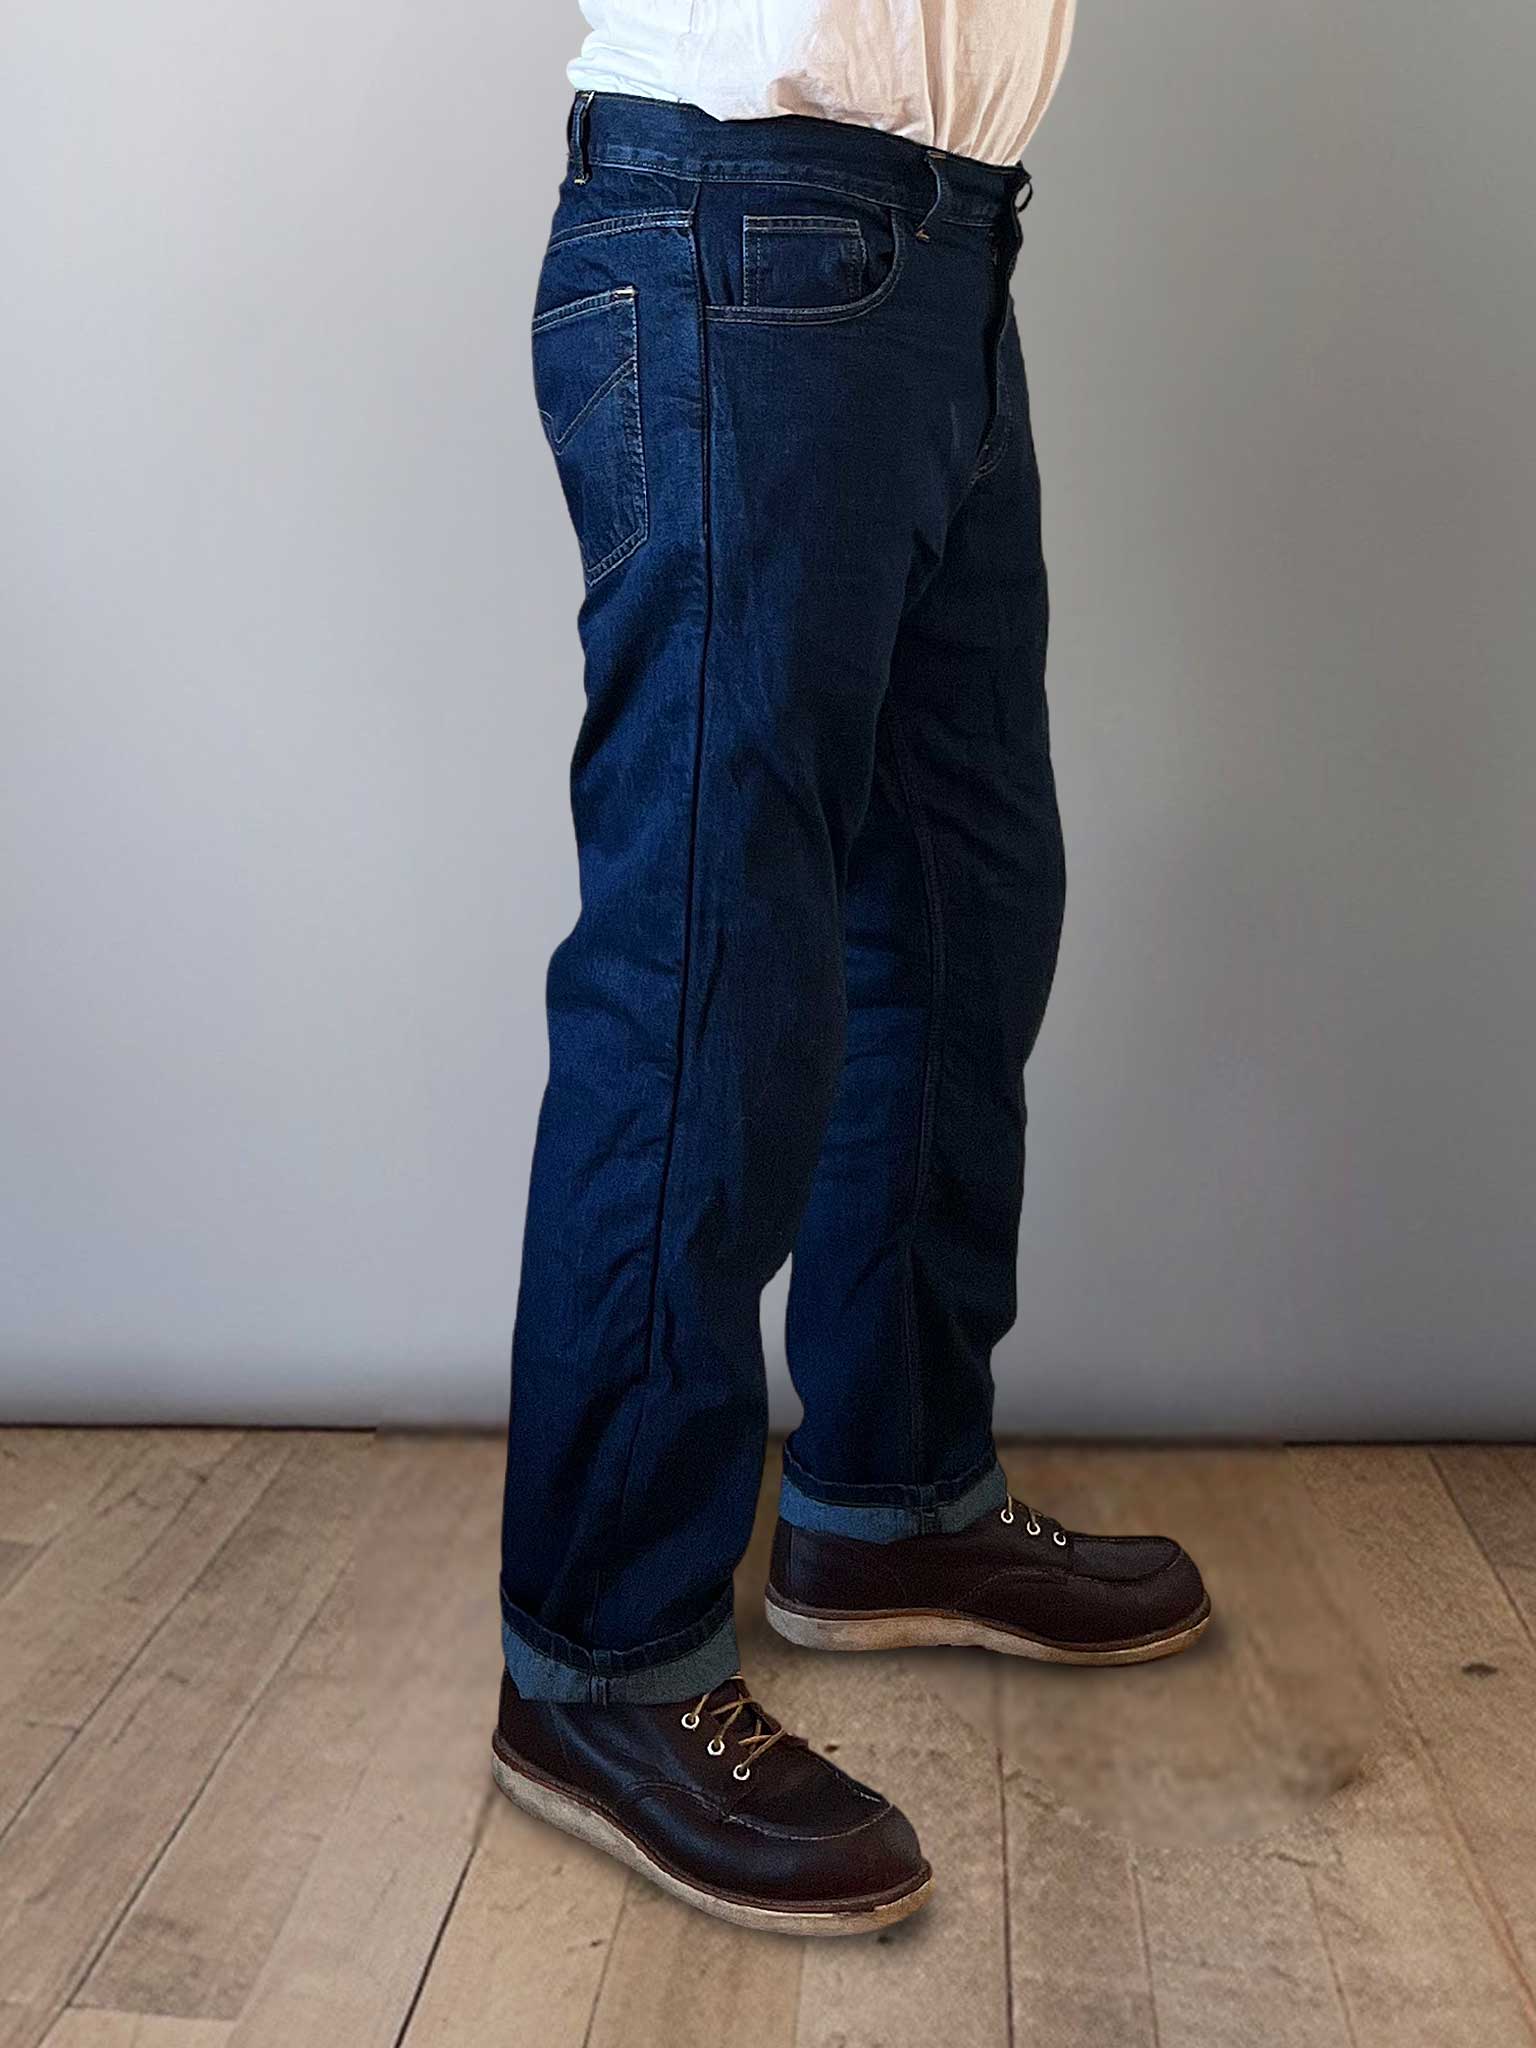 Joe Rocket Accelerator Jeans: Extremely Long-Term Test